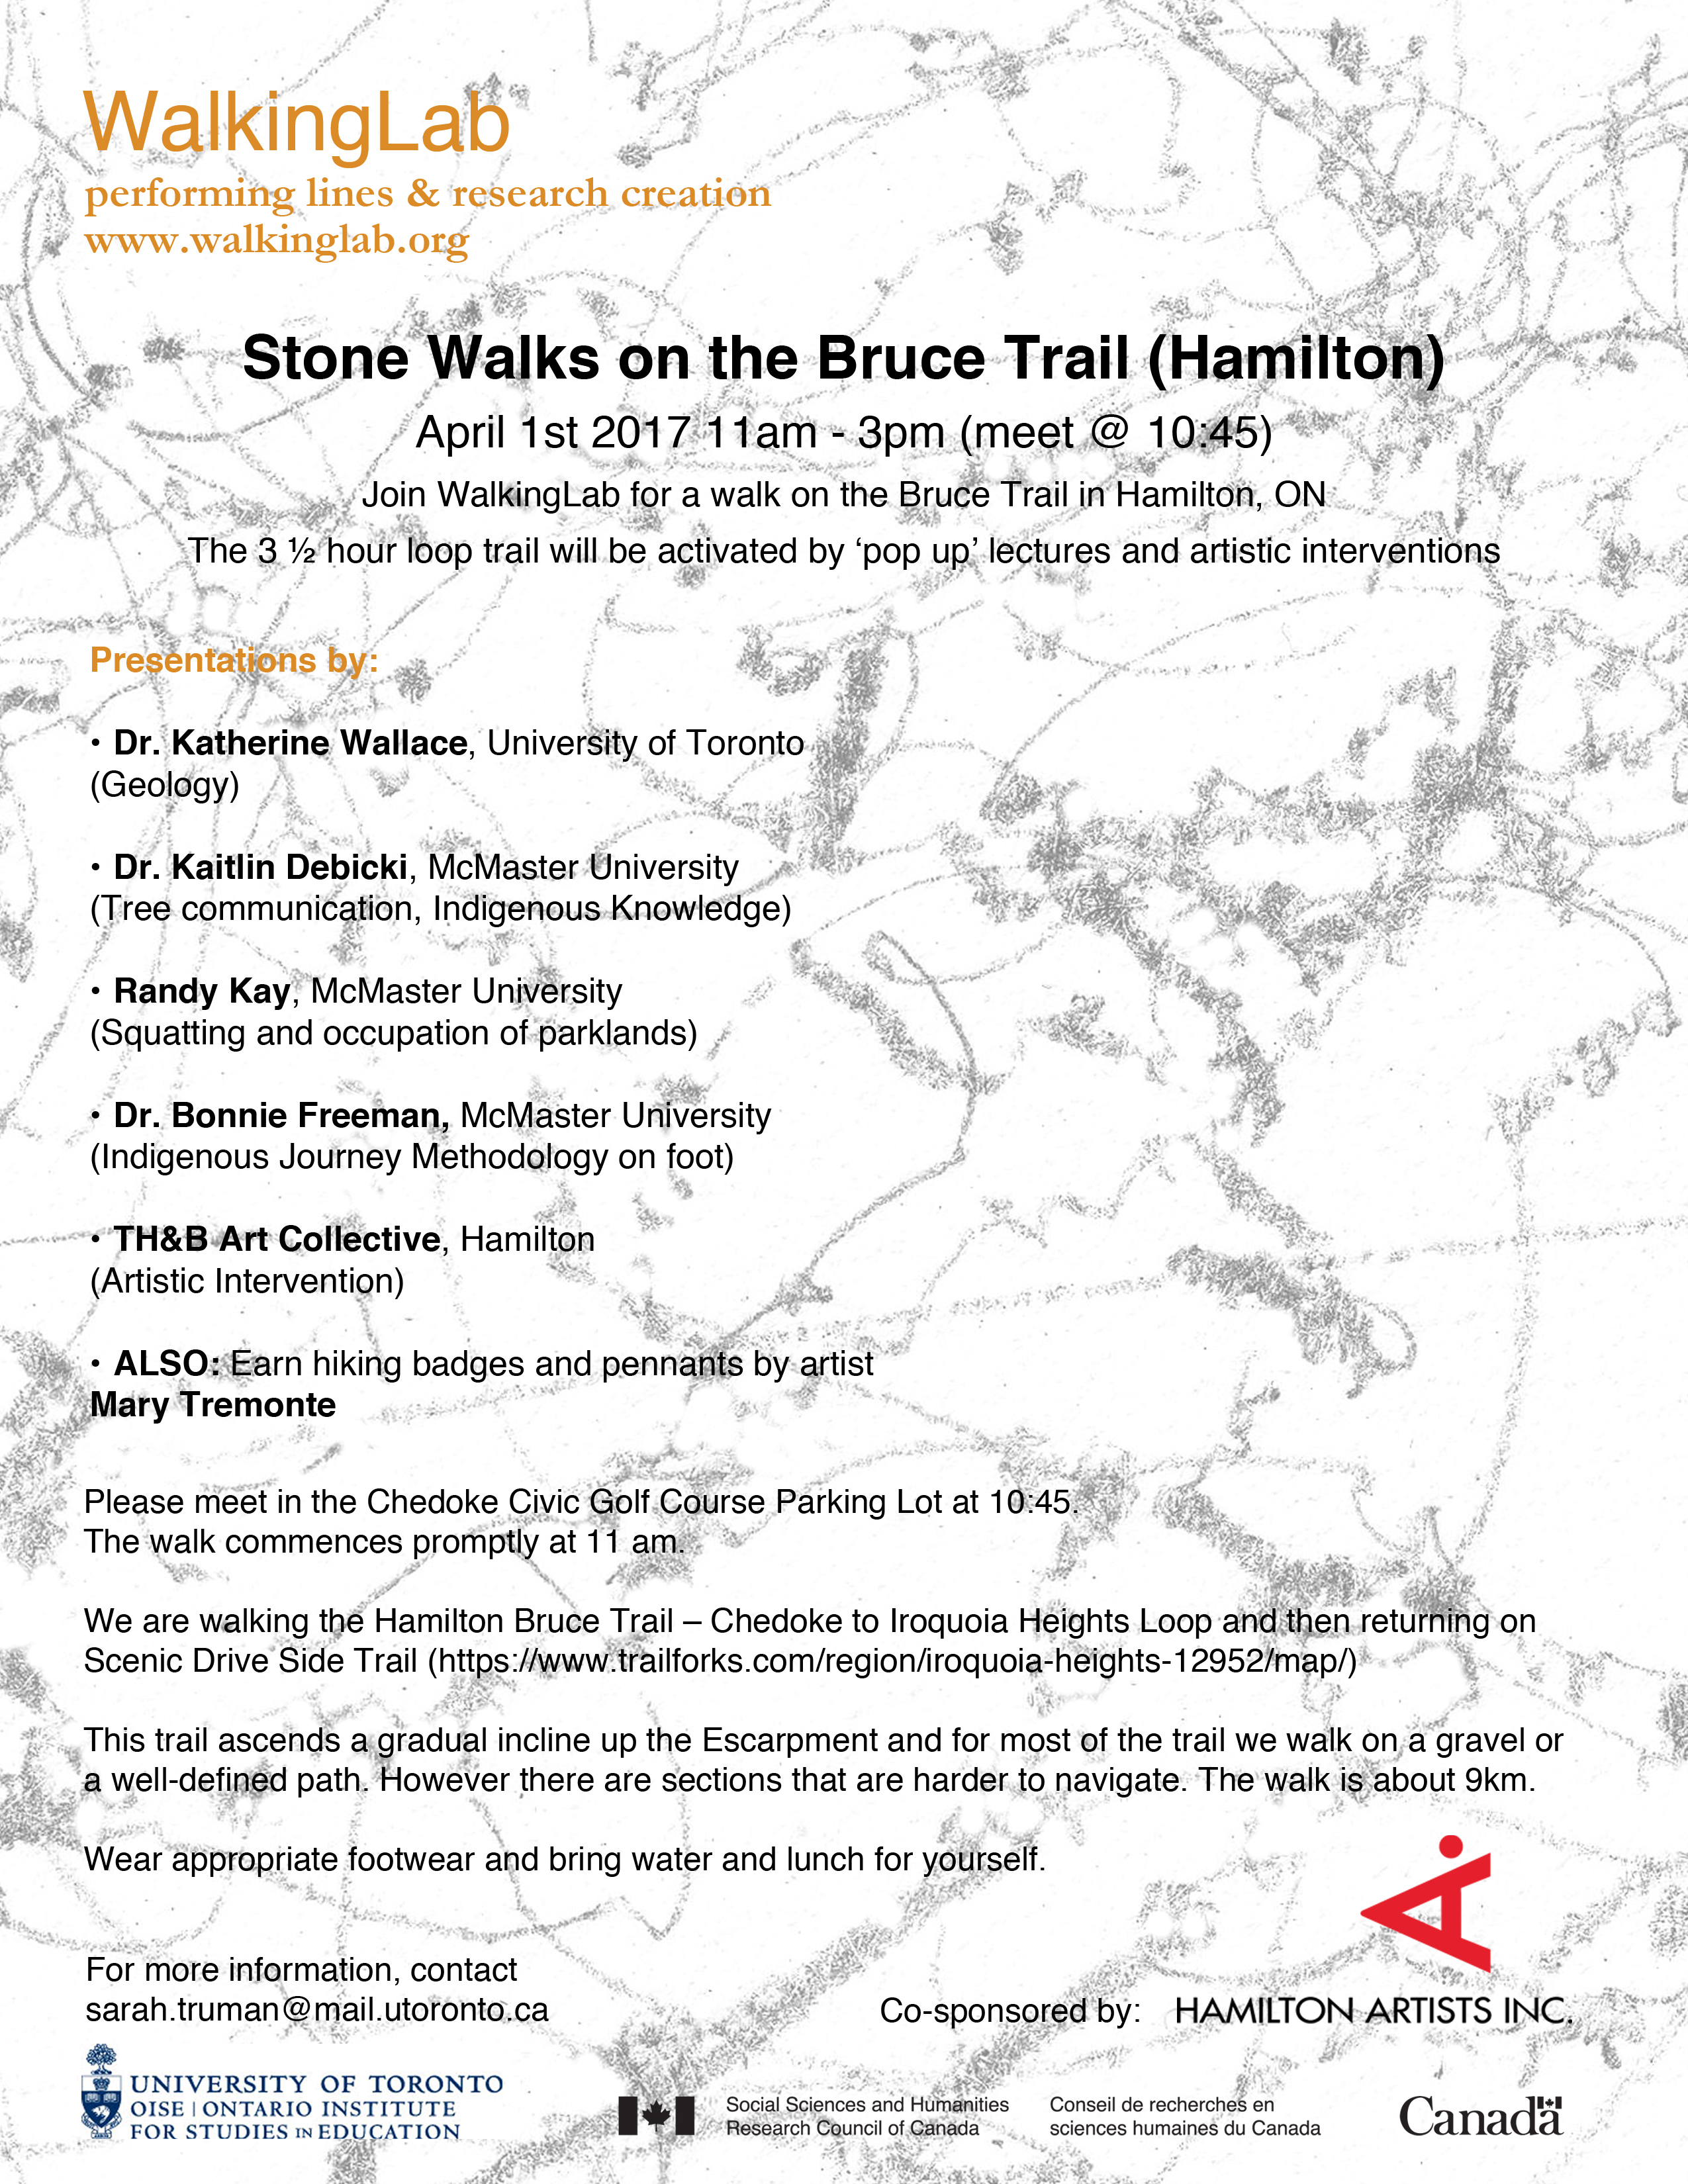 EVENT: Stone Walks on the Bruce Trail Hamilton (April 1st)